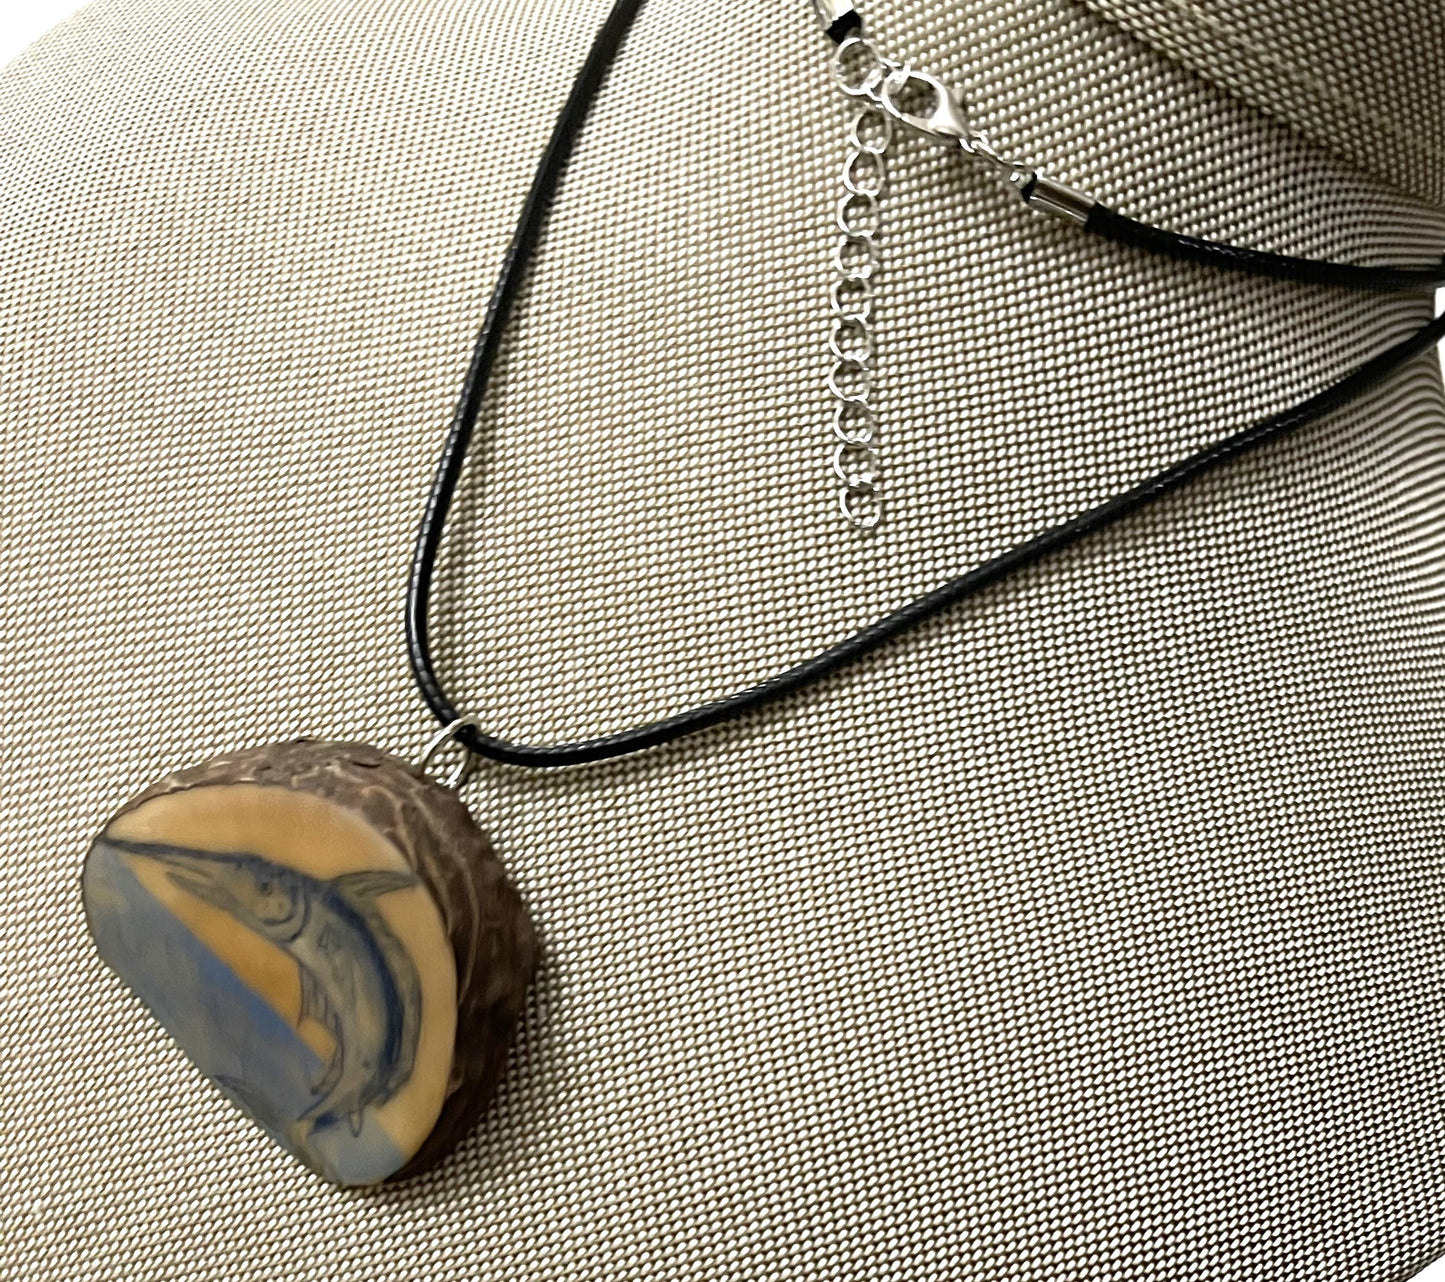 Grabado Sailfish Tagua Necklace Pendant Panama